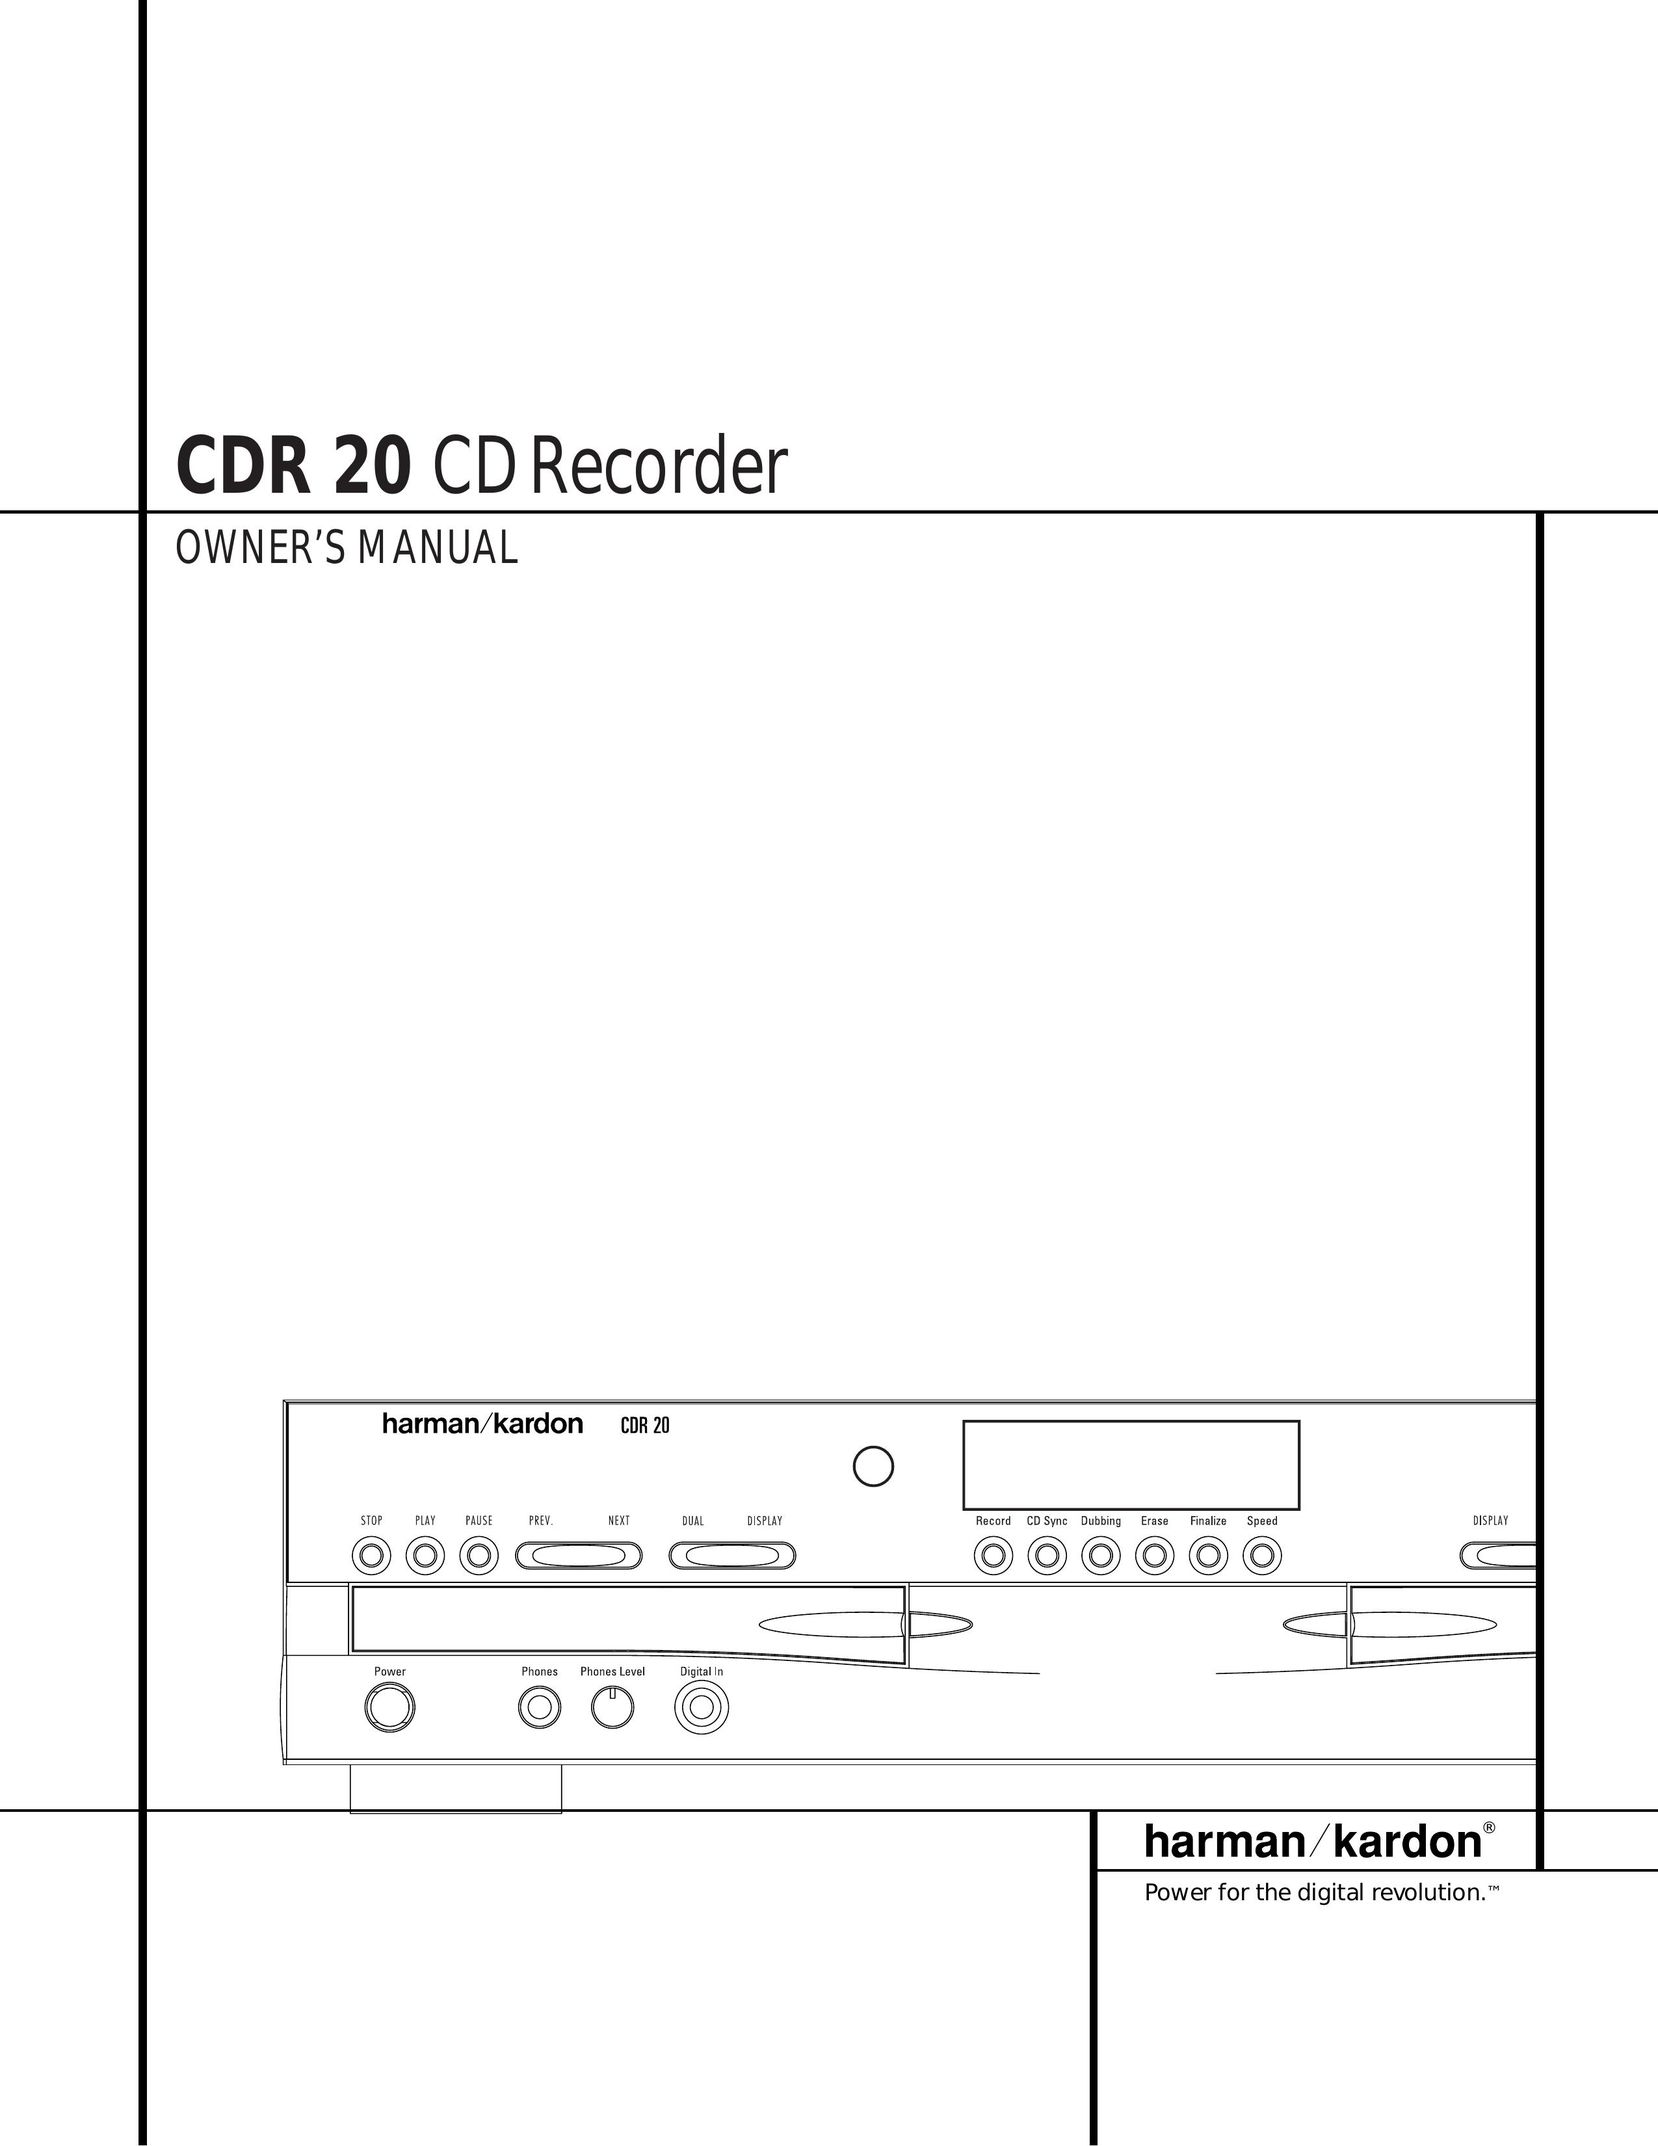 Harman-Kardon CDR 20 CD Player User Manual (Page 1)